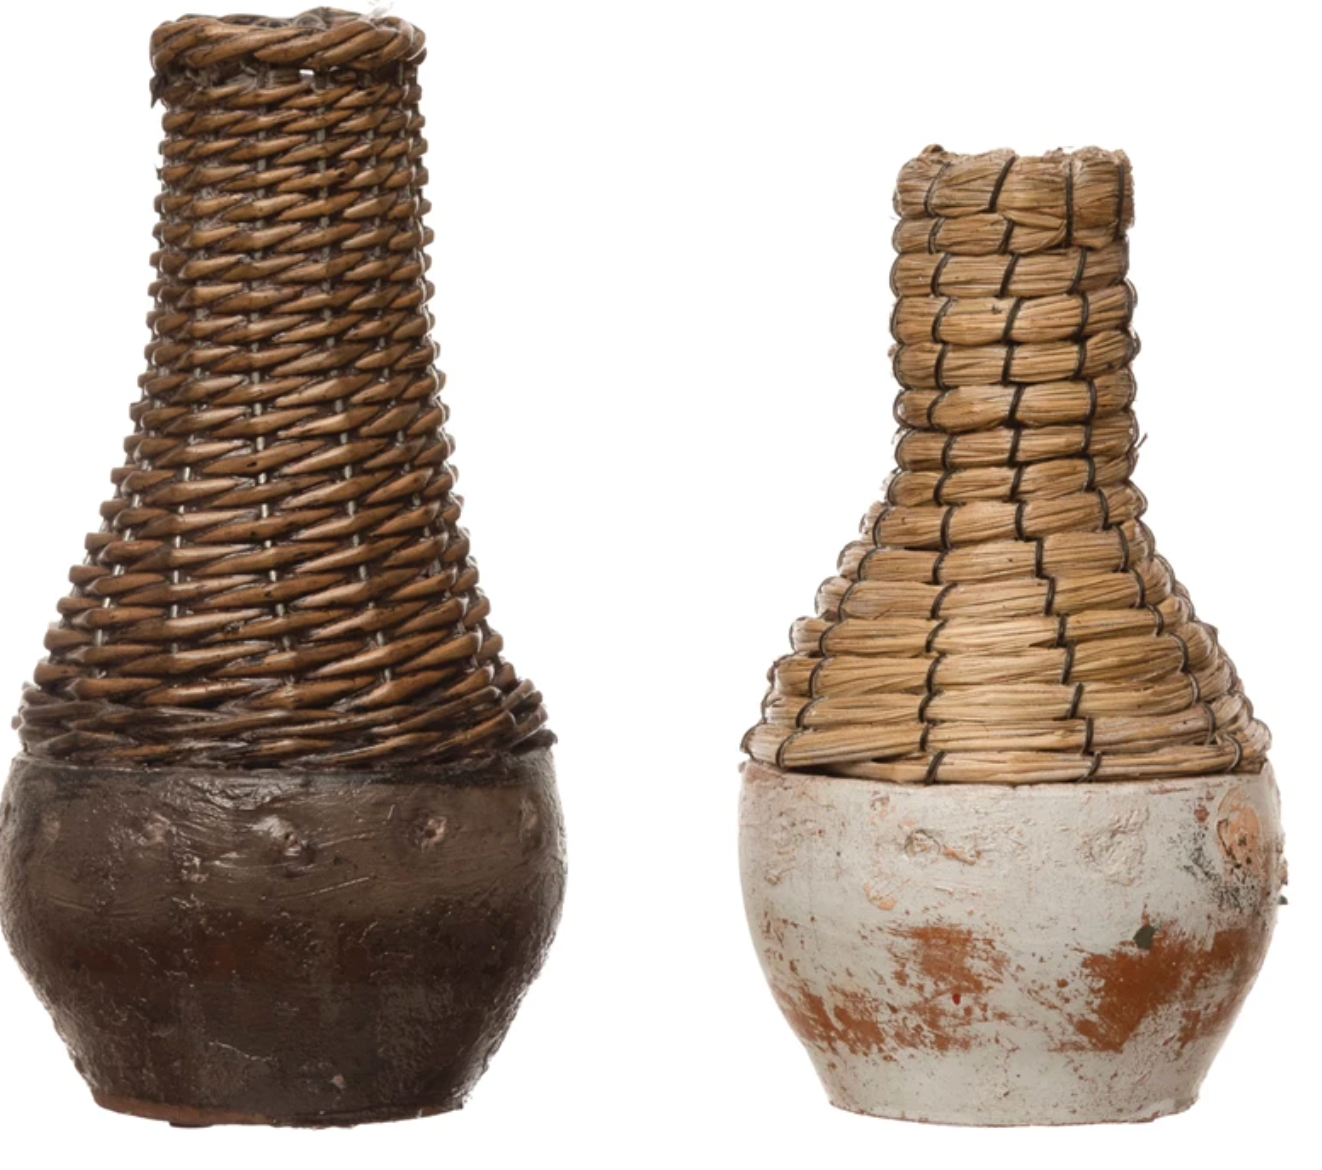 Hand-Woven Rattan Vase w/ Clay